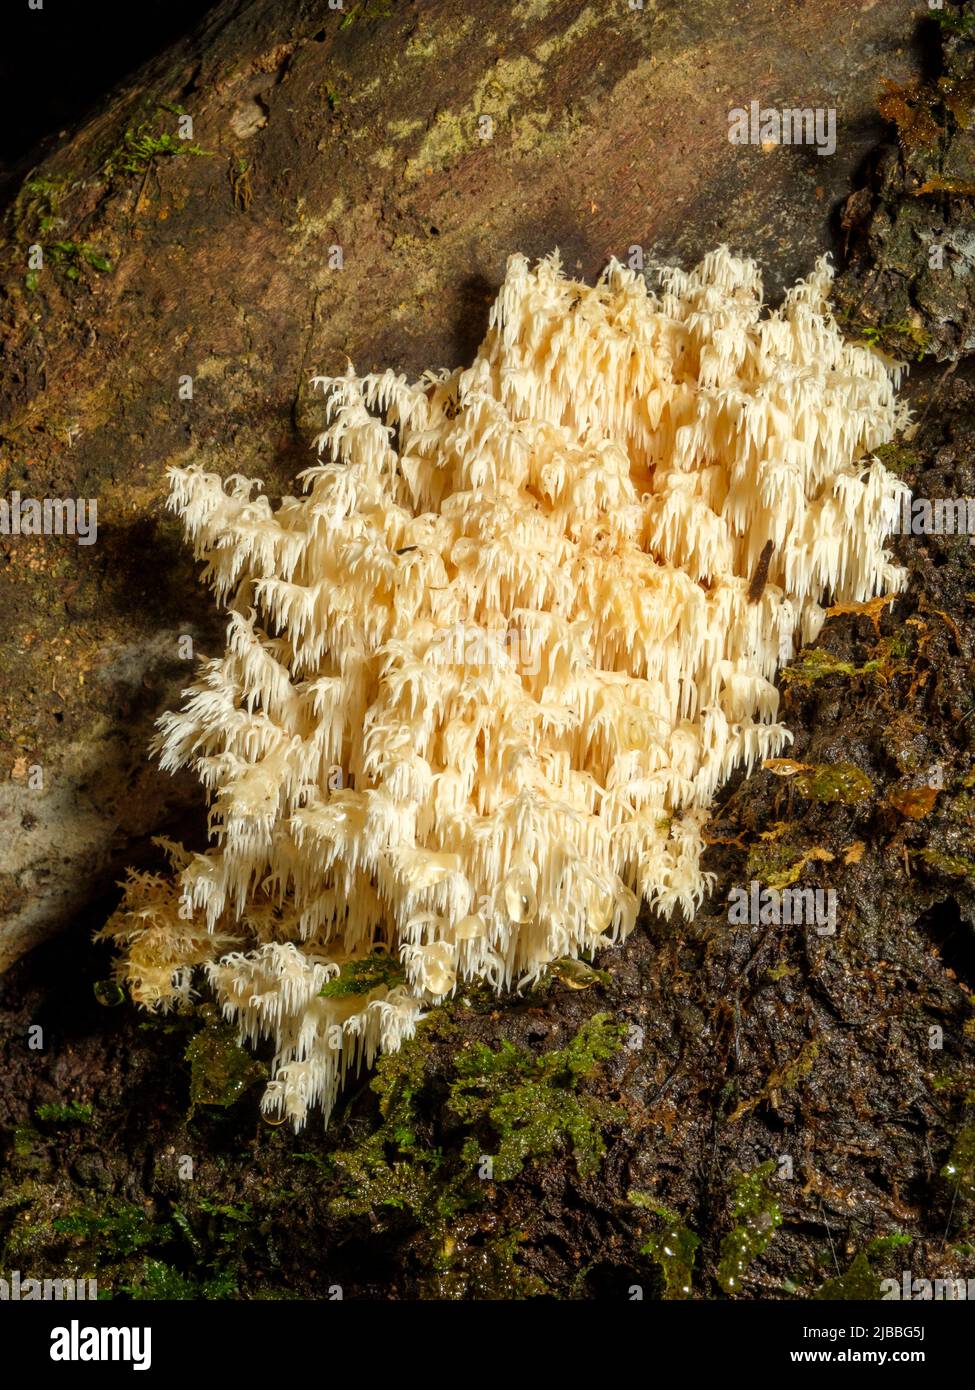 Mt Glorious - Fungi (Hericium coralloides) Stock Photo